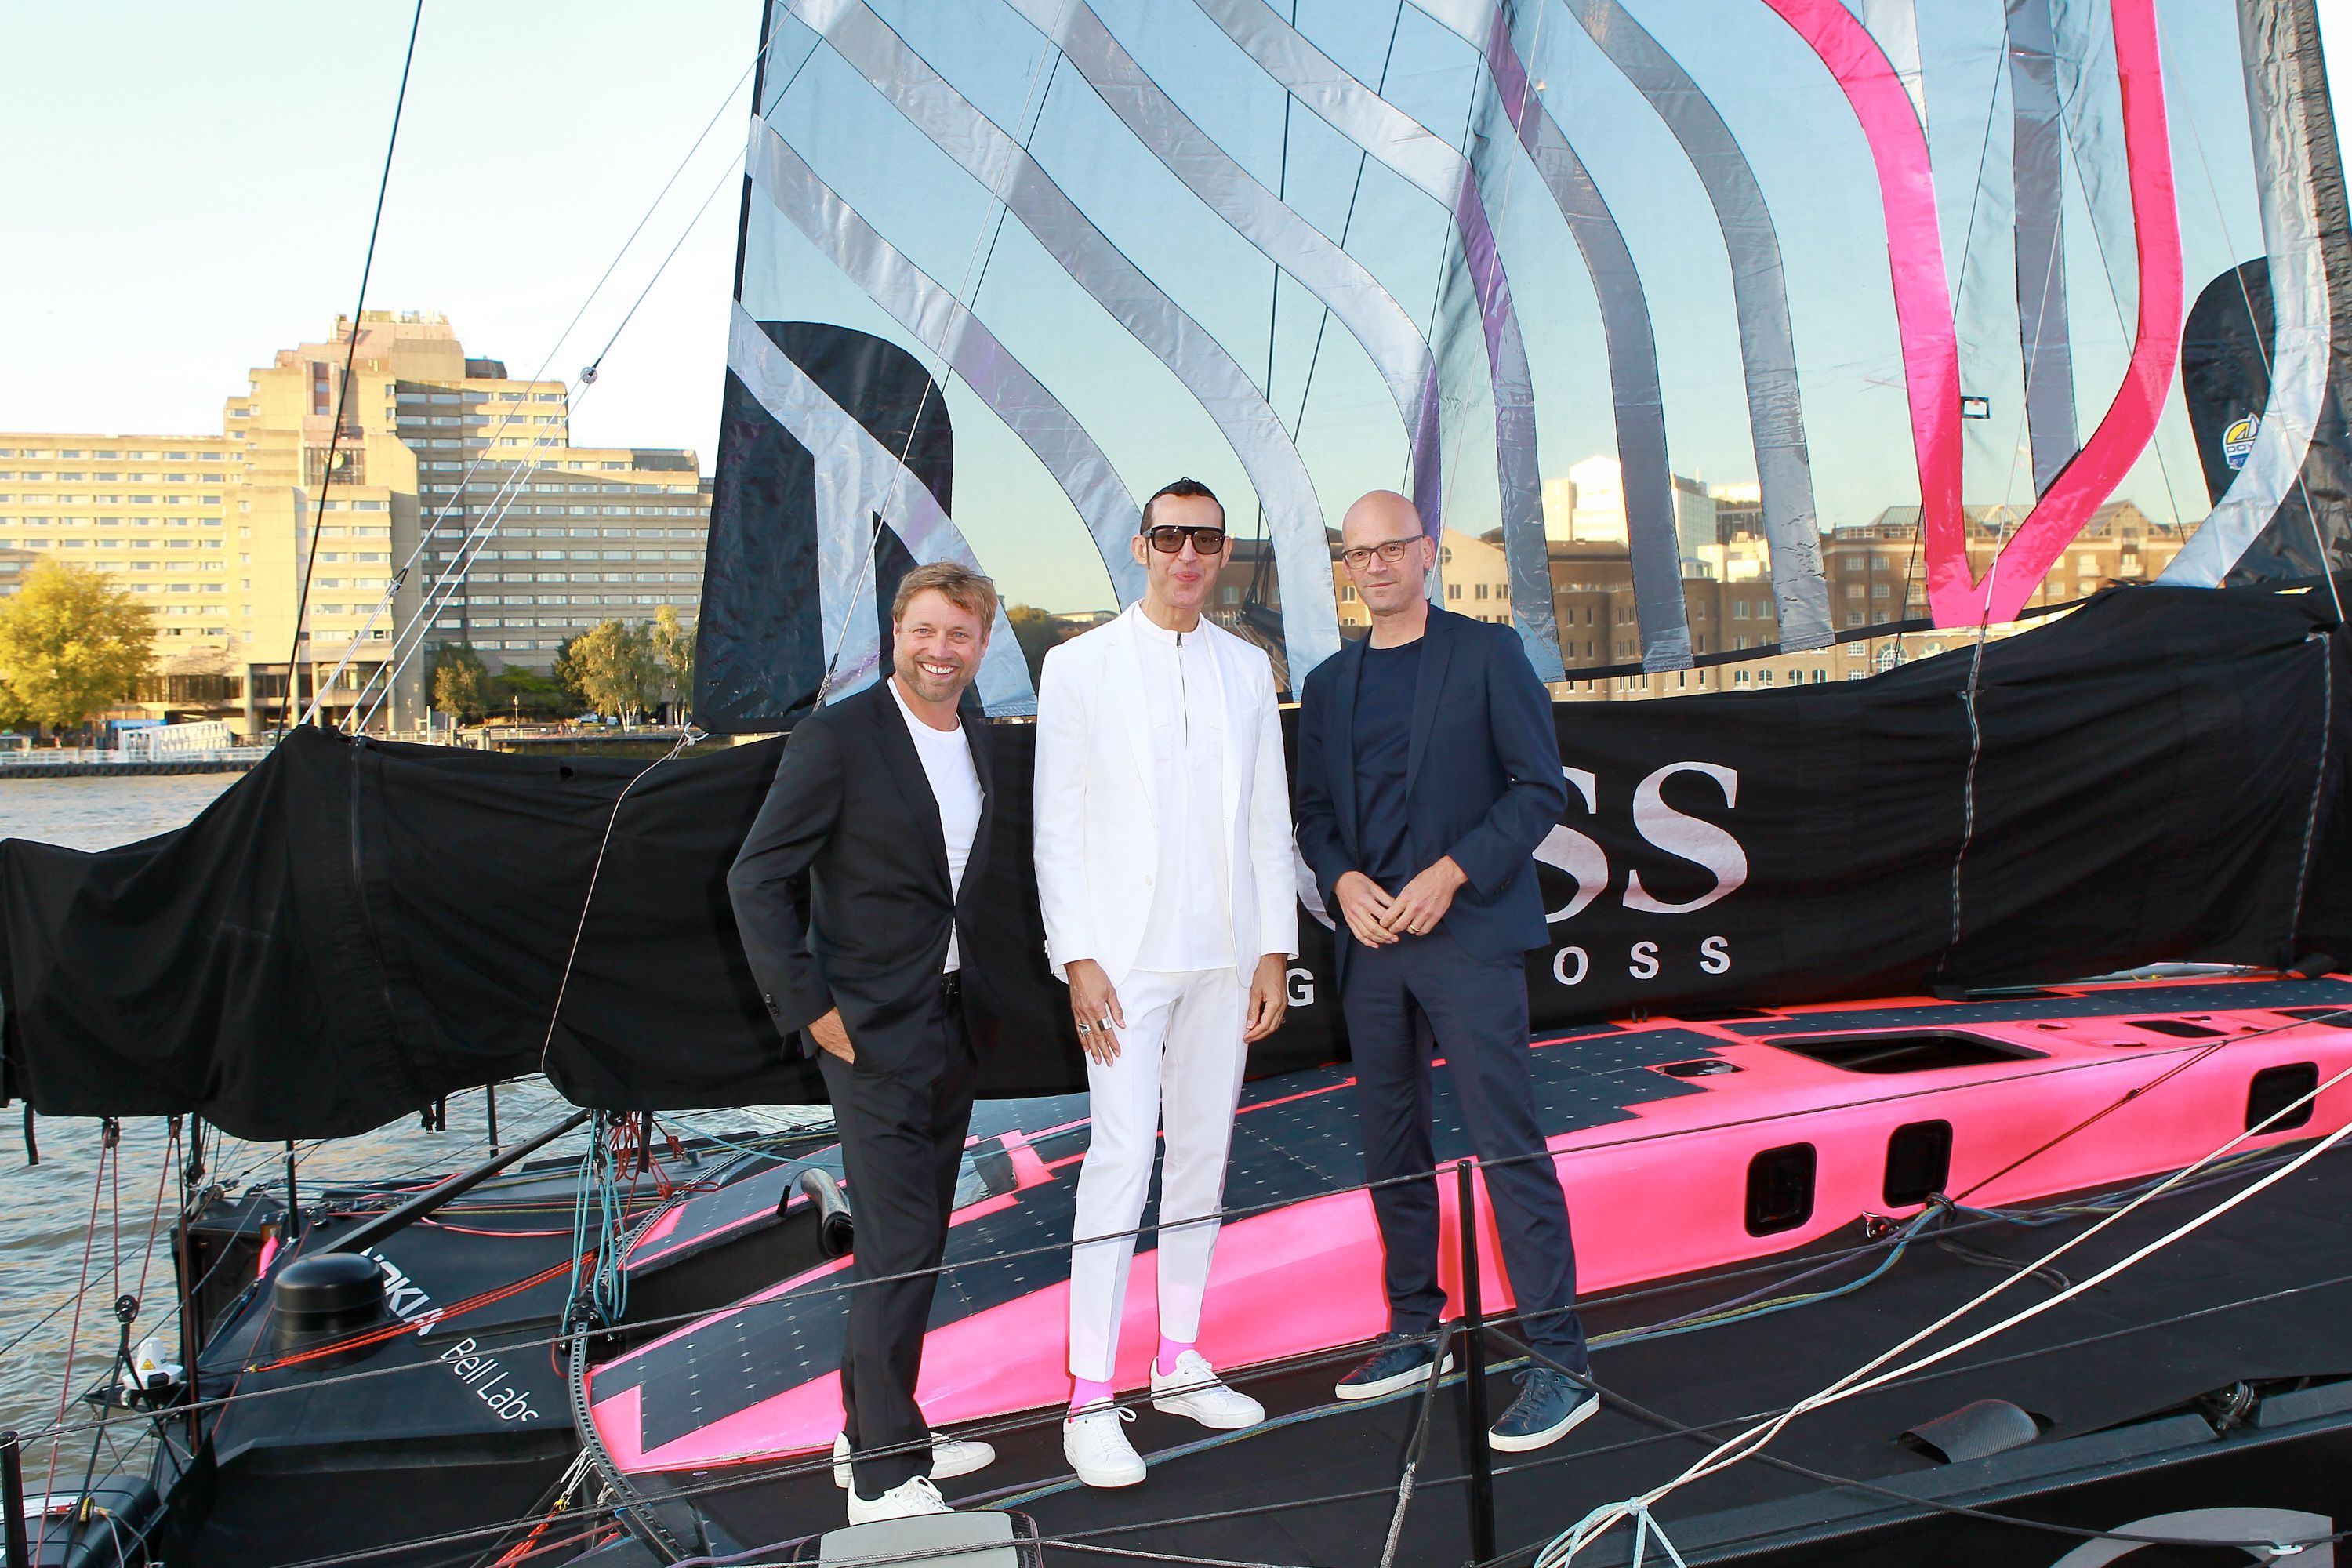 new hugo boss yacht